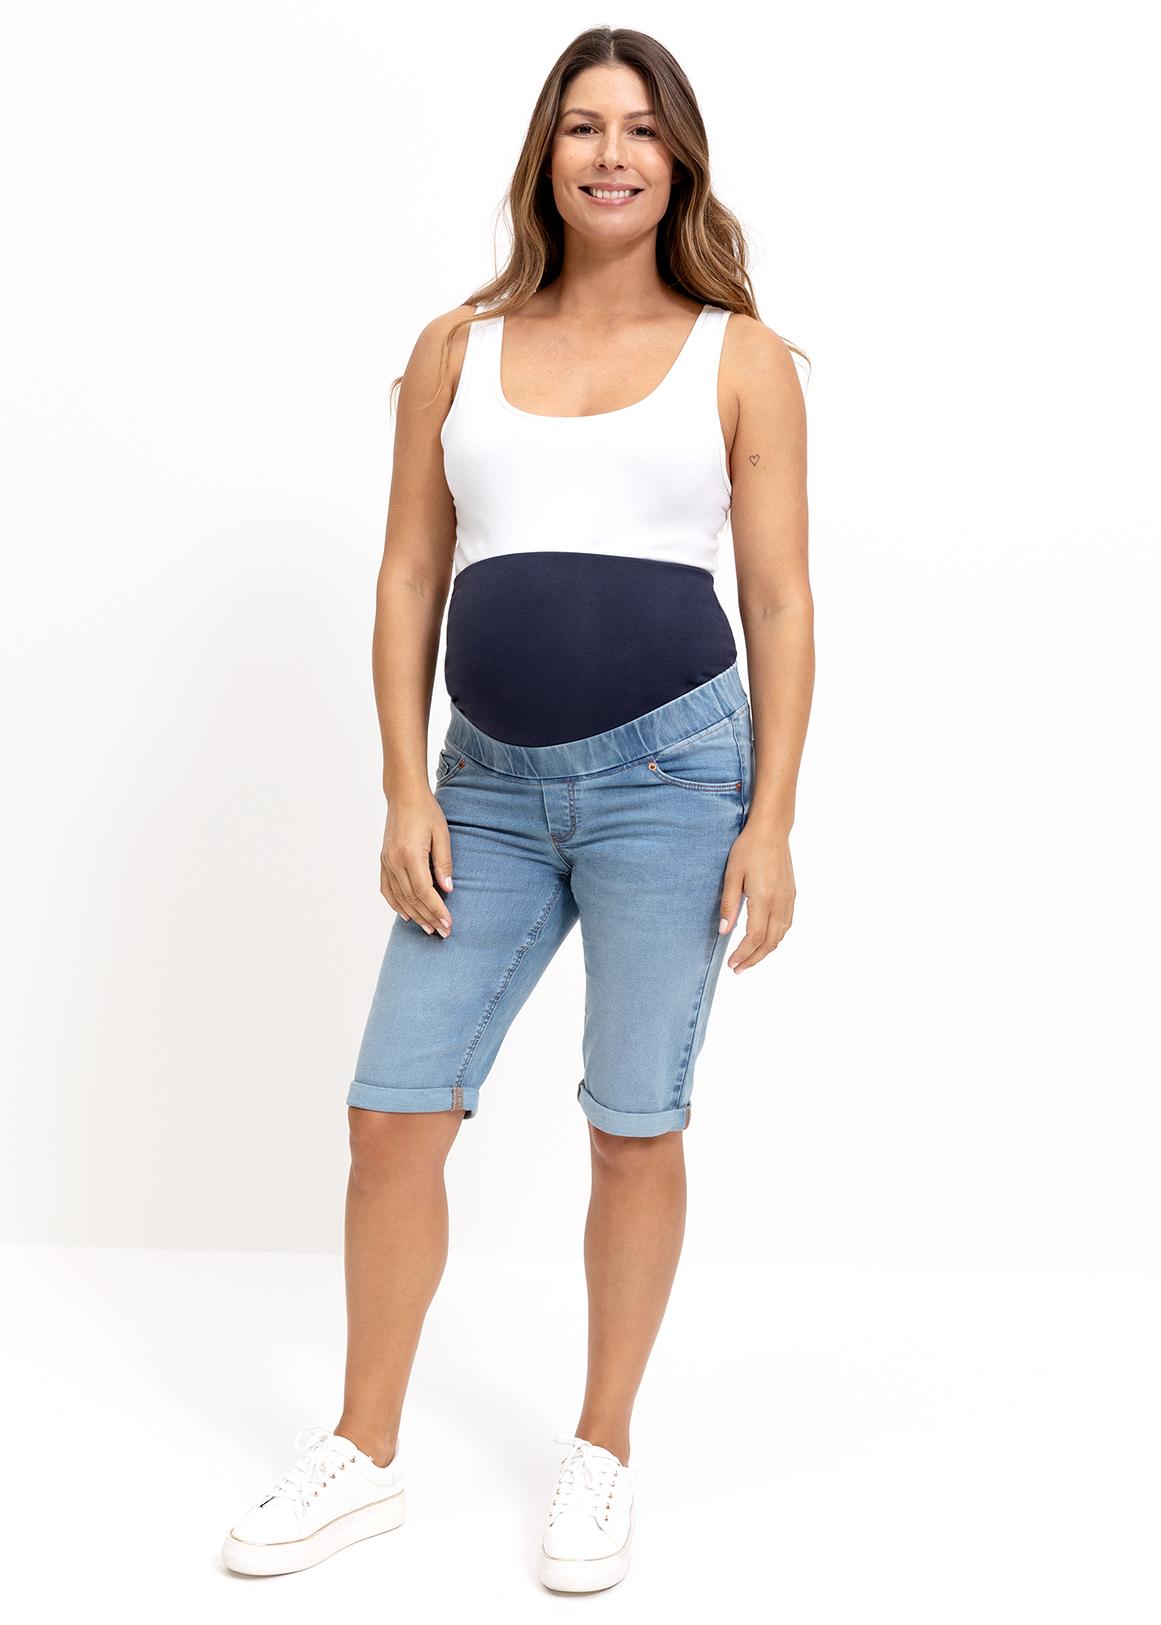 Buy V VOCNI Maternity Denim Shorts Women's Summer High Waist